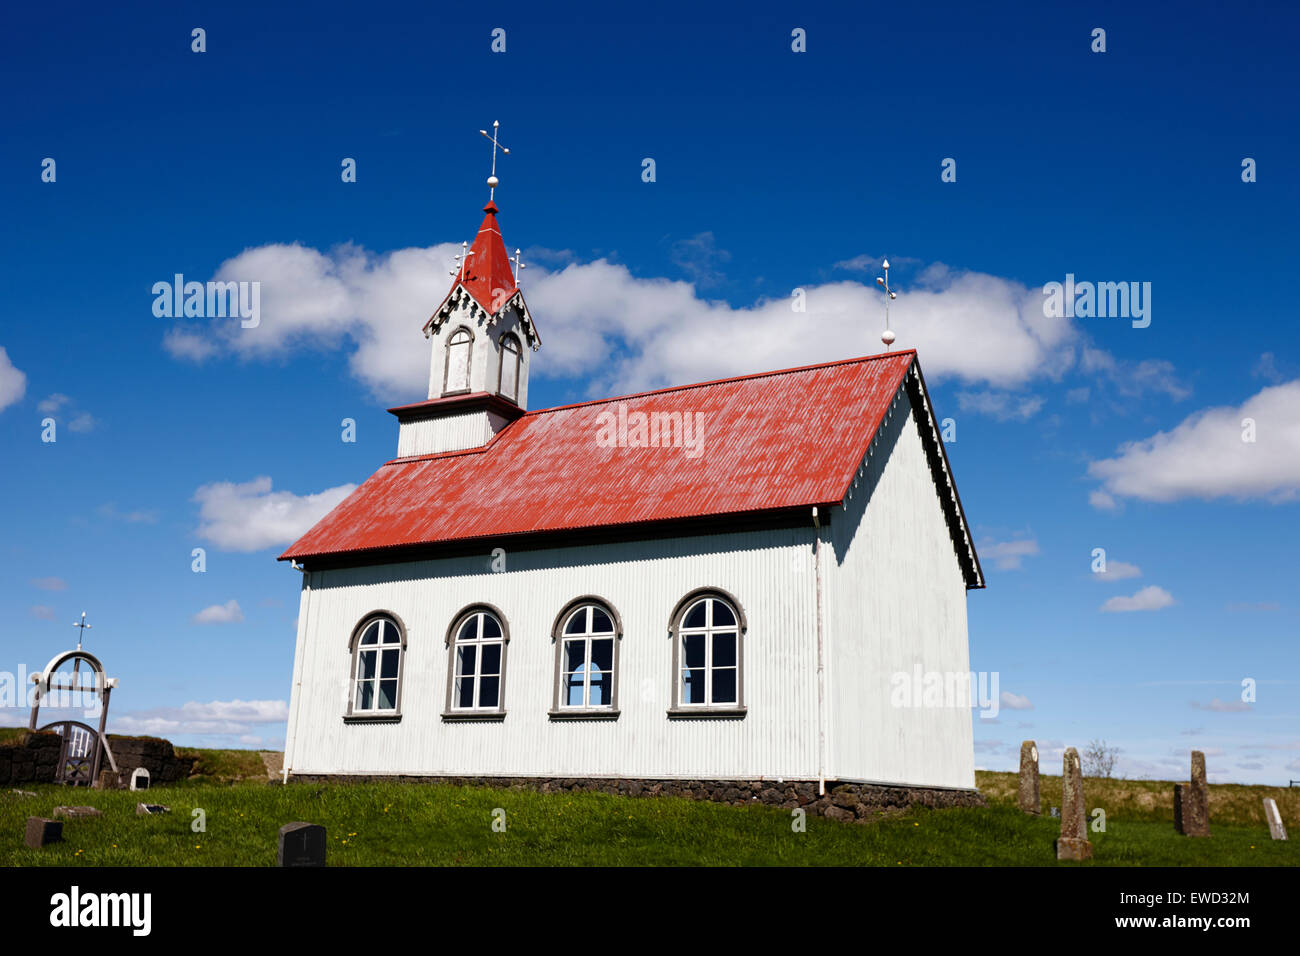 typical icelandic style church at Hraungerði hraungerdi iceland designed by Eirikur Gislason and built in 1902 Stock Photo